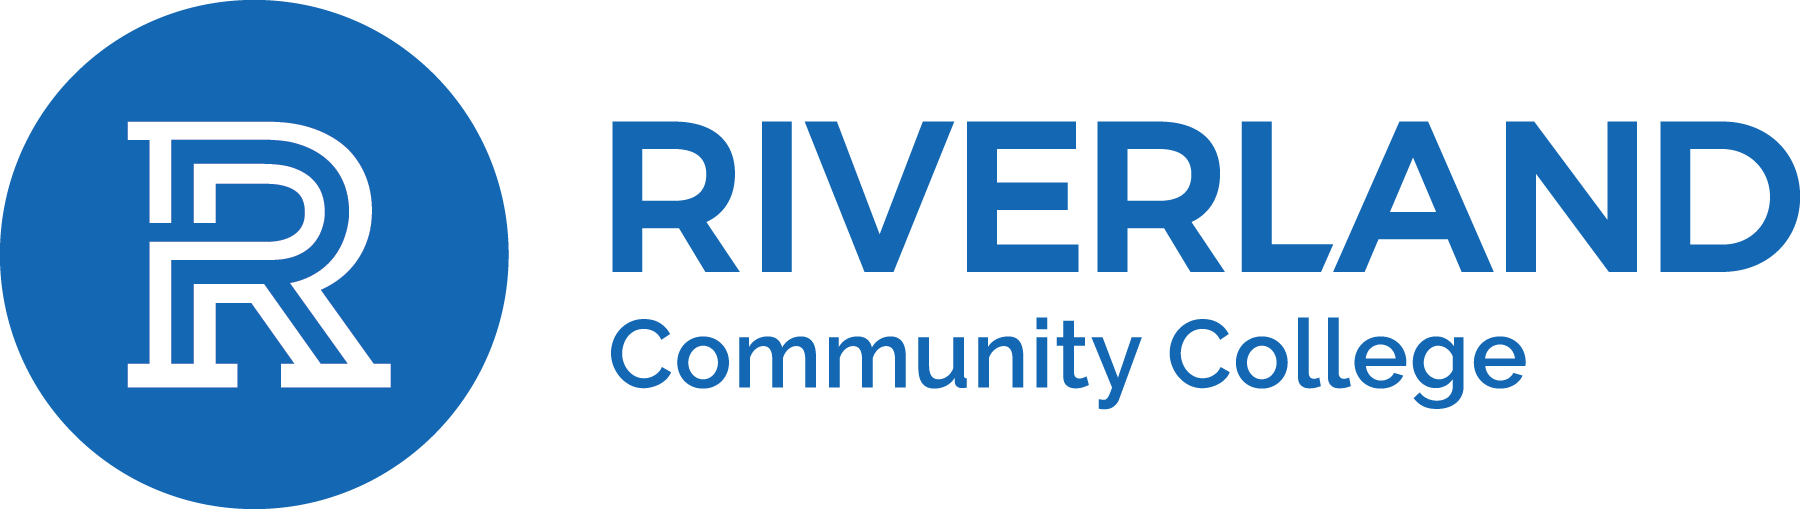 Riverland_Logo_Horizontal.png